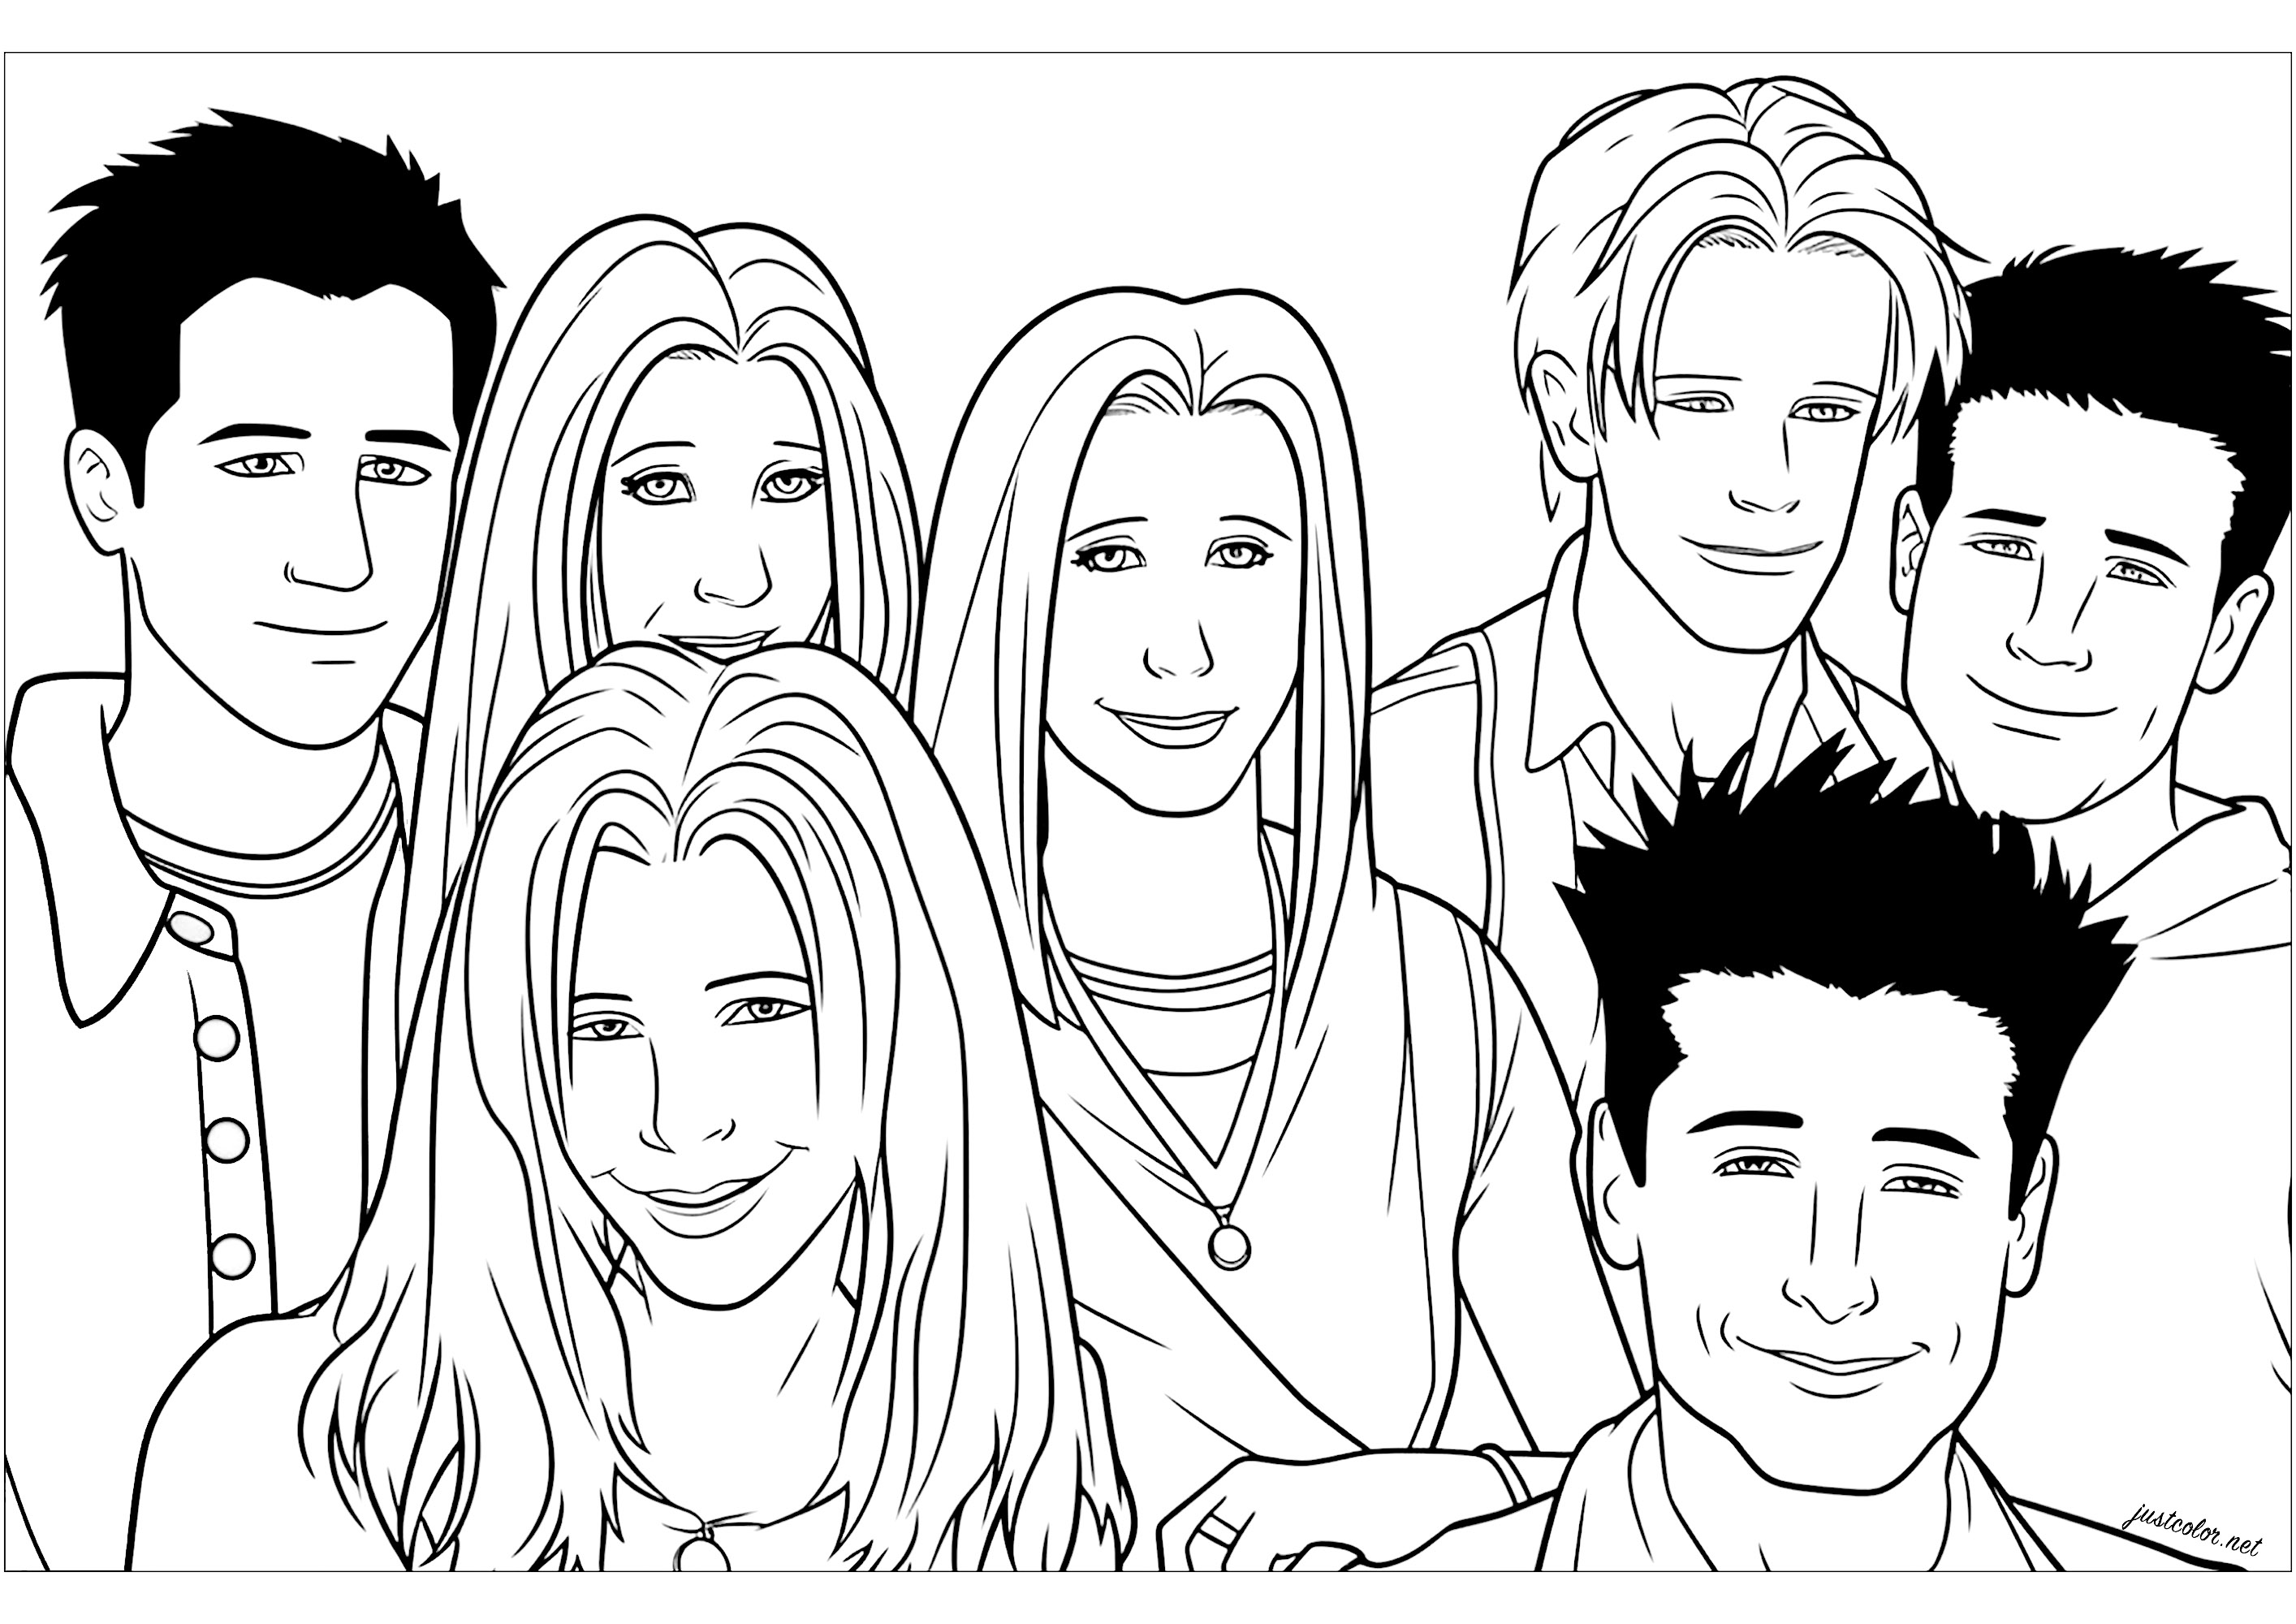 4 rapazes e 3 raparigas ...... como algo saído de uma série de culto dos anos 90!. Perfeito para os nostálgicos dos anos 90, para Brenda, Dylan, Brandon ... Ou para a Mónica, a Rachel, o Chandler, o Ross ...